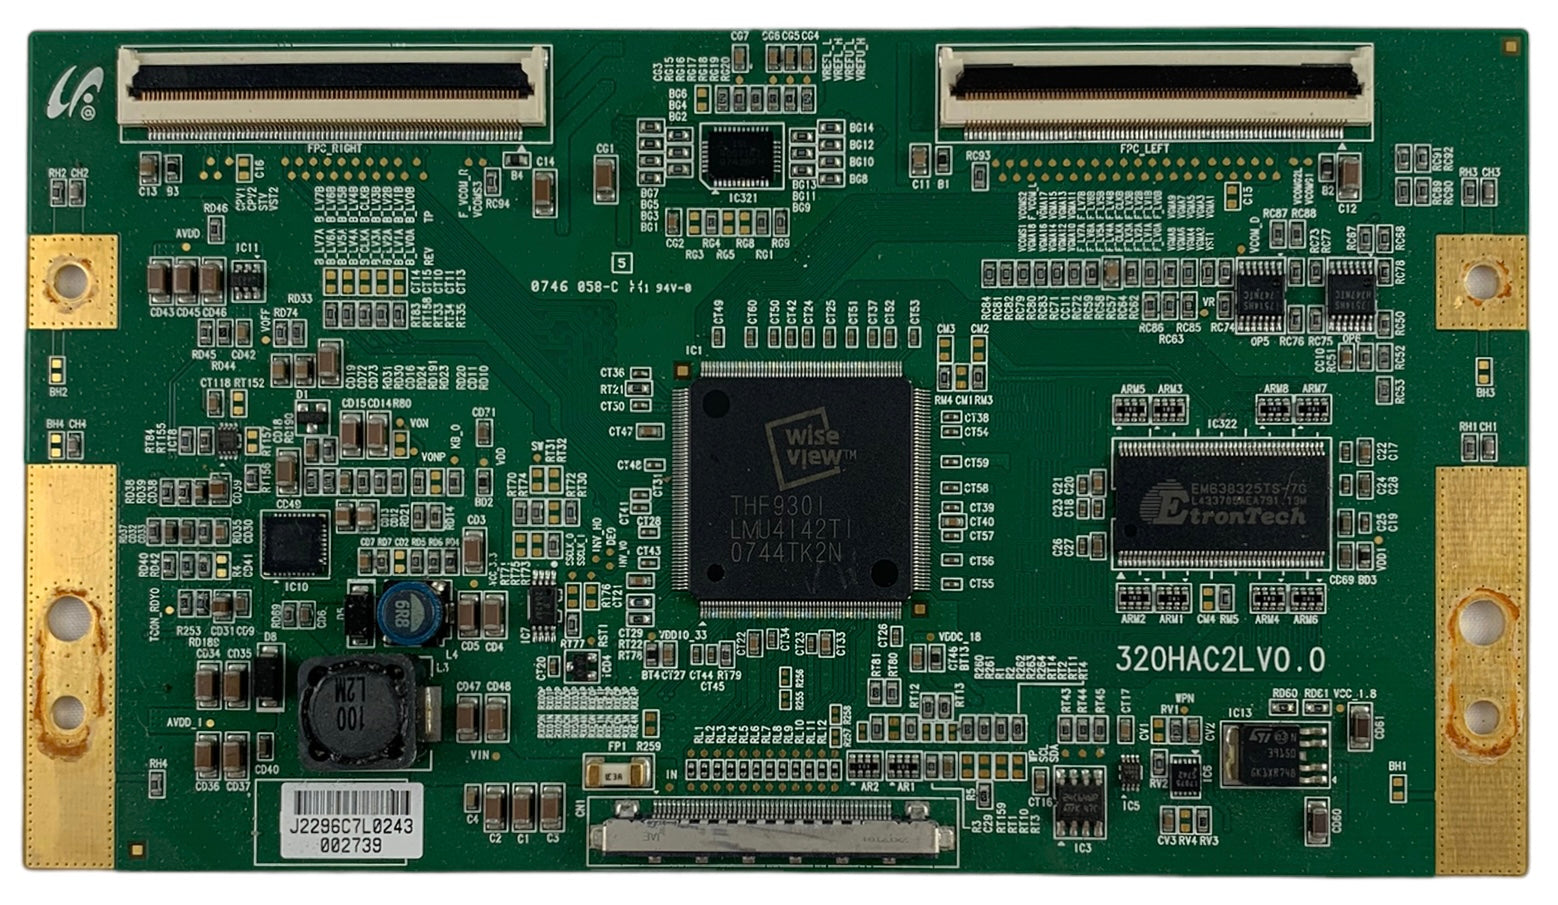 Samsung LJ94-02296C (320HAC2LV0.0) T-Con Board